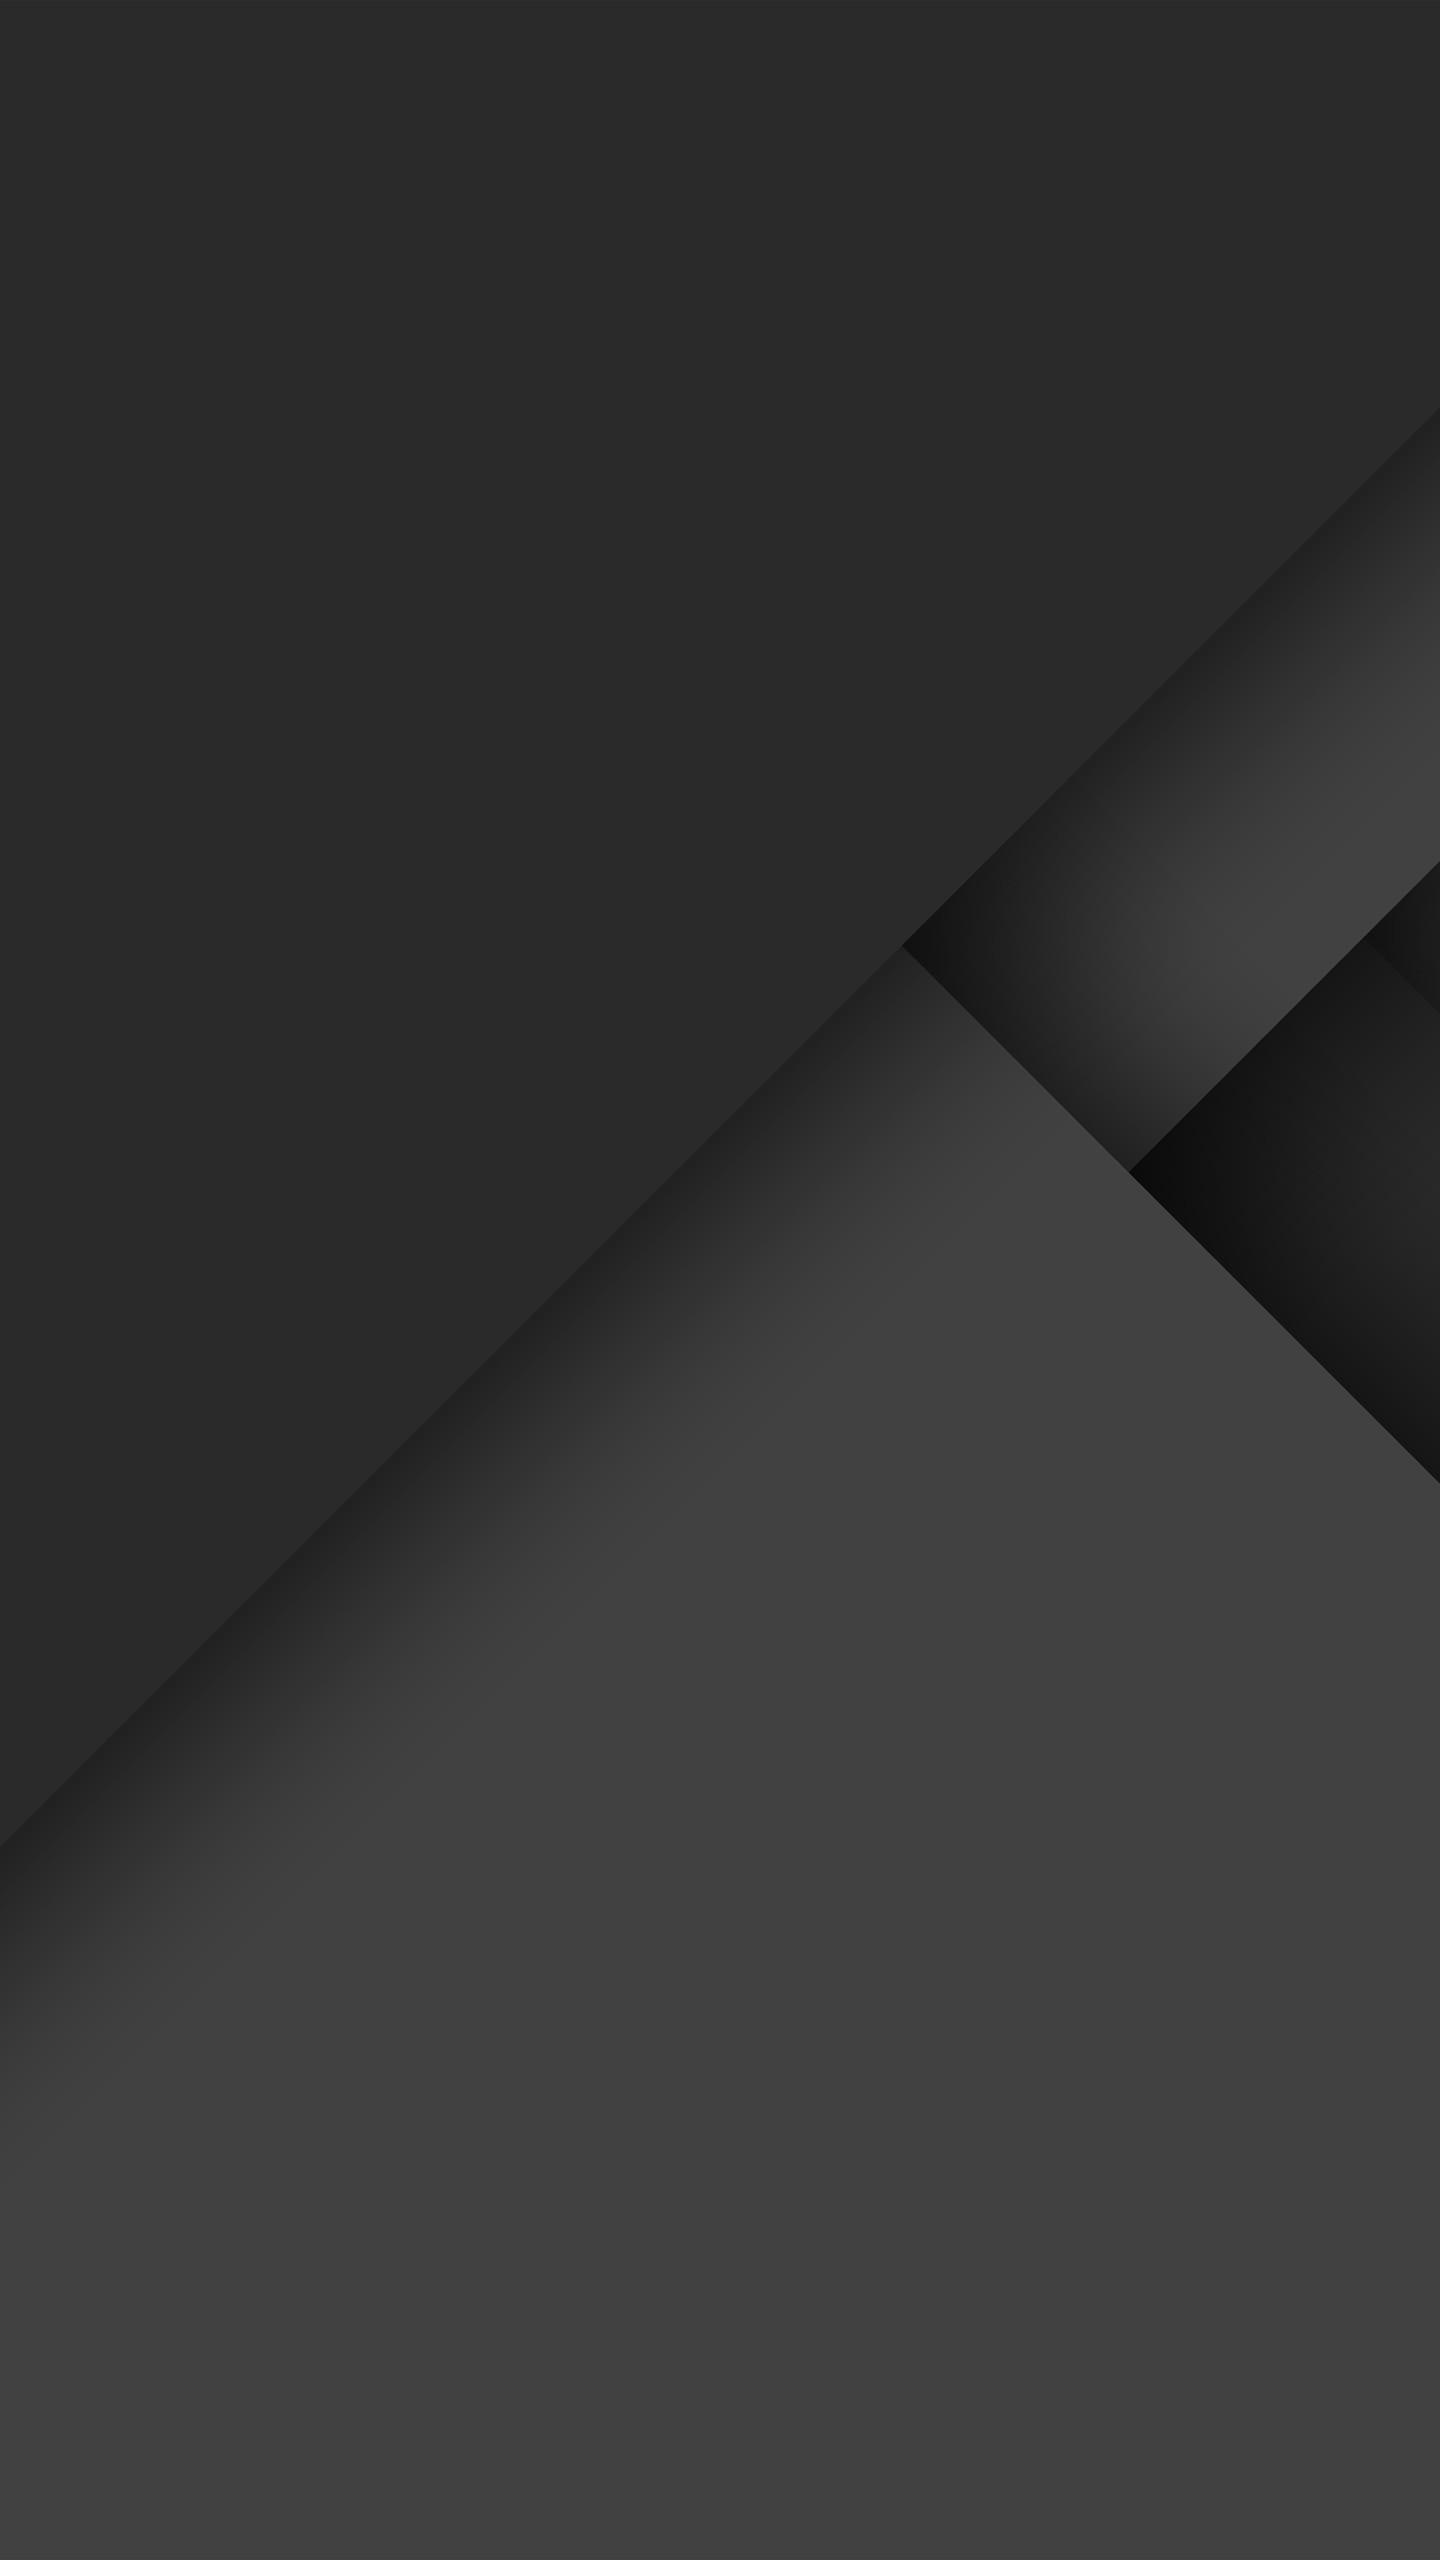 Gray Slate: Black, Deep charcoal shades, Minimalistic. 1440x2560 HD Wallpaper.